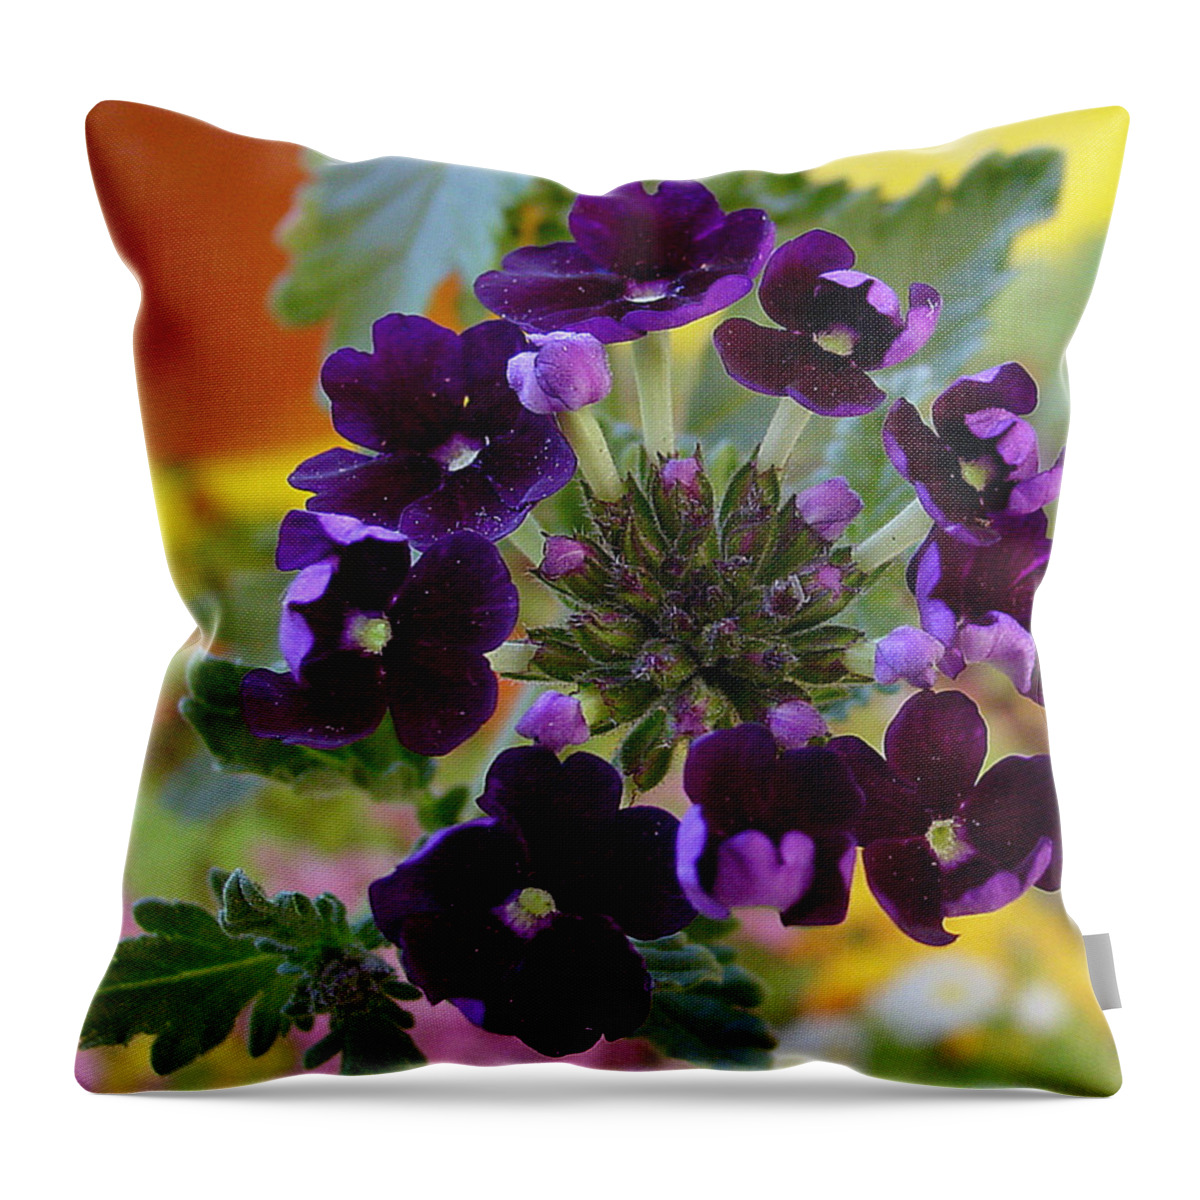 Purple Petals Throw Pillow featuring the photograph Velvet Petals by Kathy Bucari